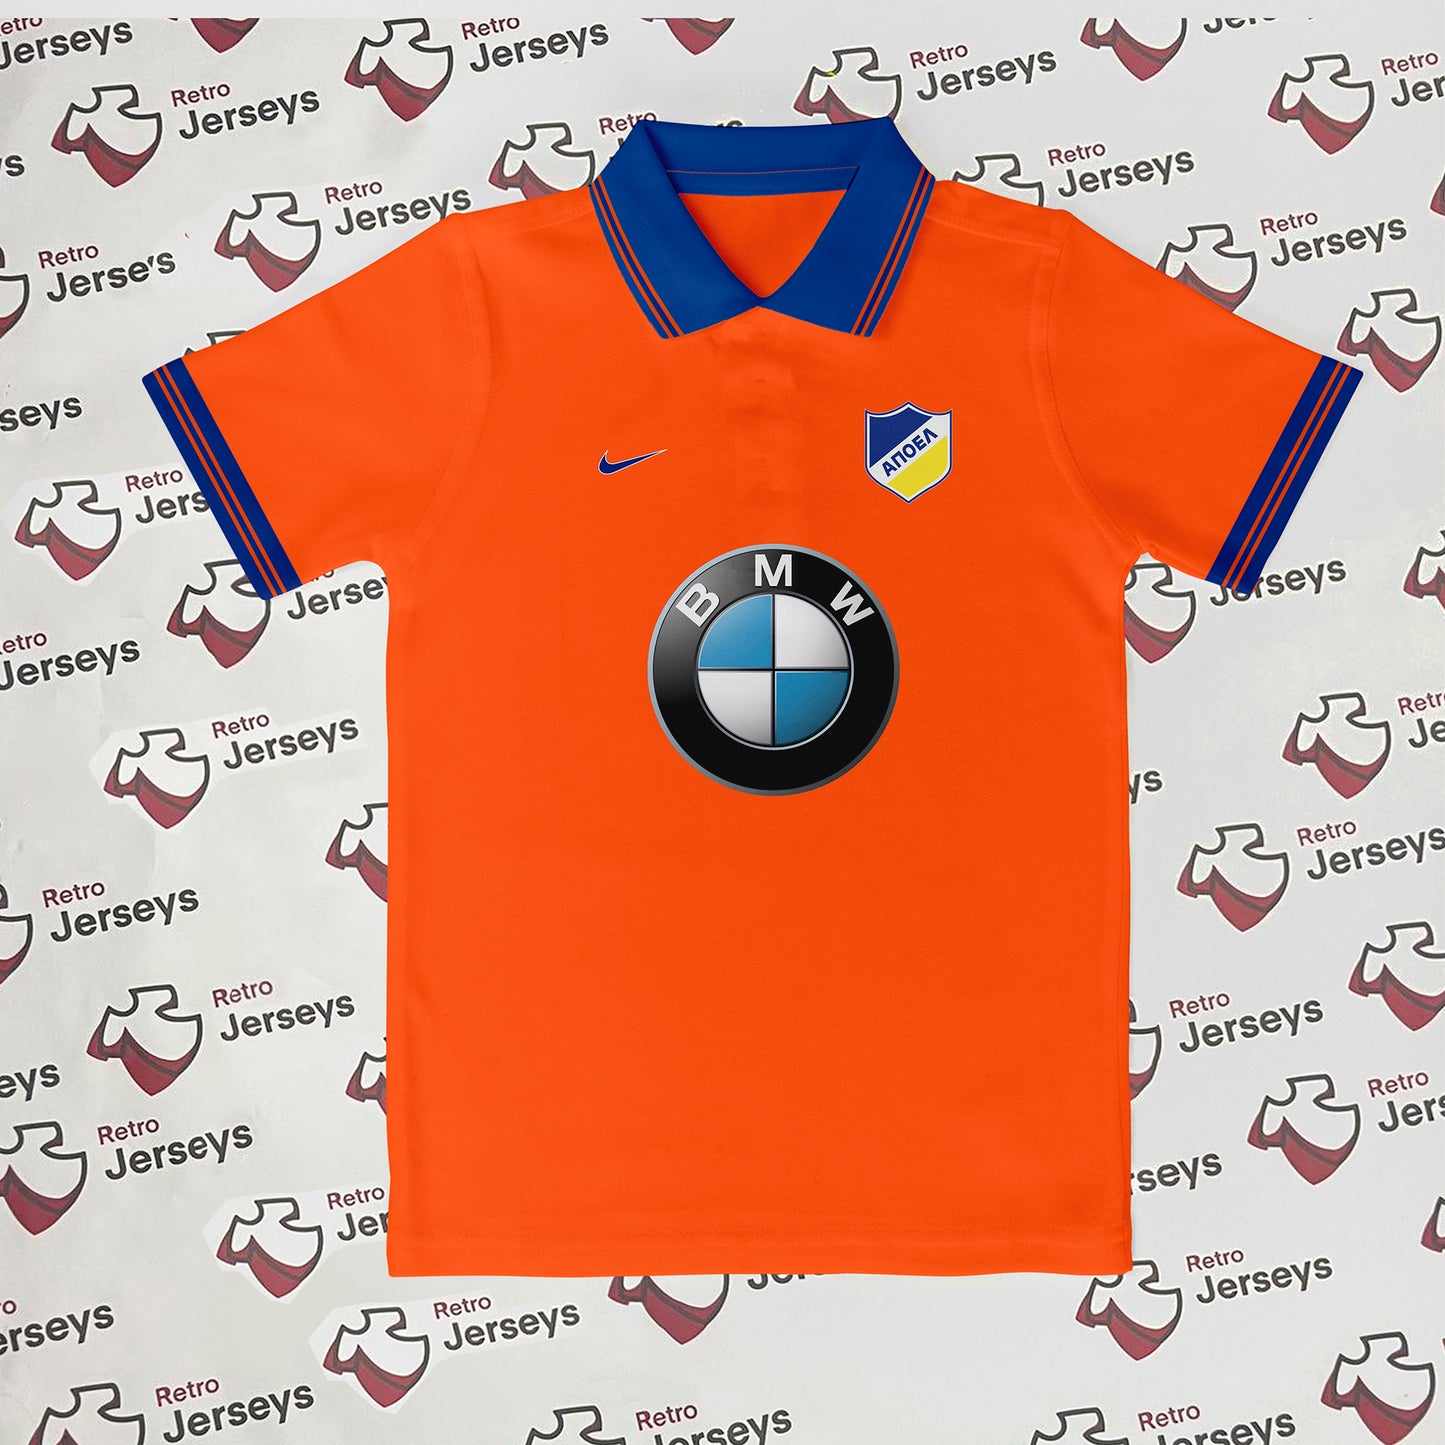 APOEL Nicosia Shirt 2000-2001 Away - Retro Jersey, φανέλα αποέλ - Retro Jerseys